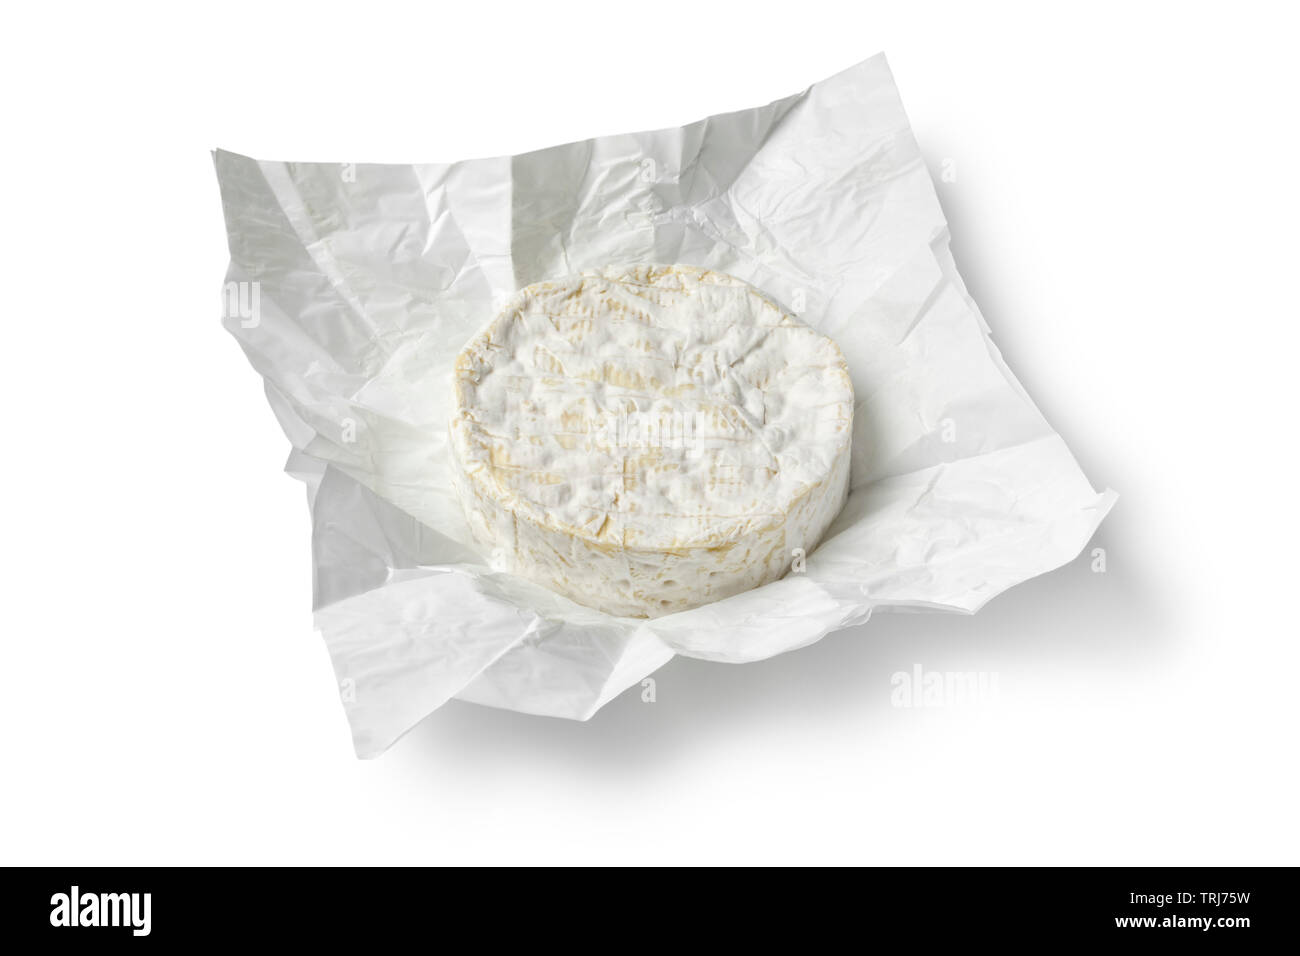 Solo ronda entera francés Brie cheeseat papel paquete aislado sobre fondo blanco. Foto de stock